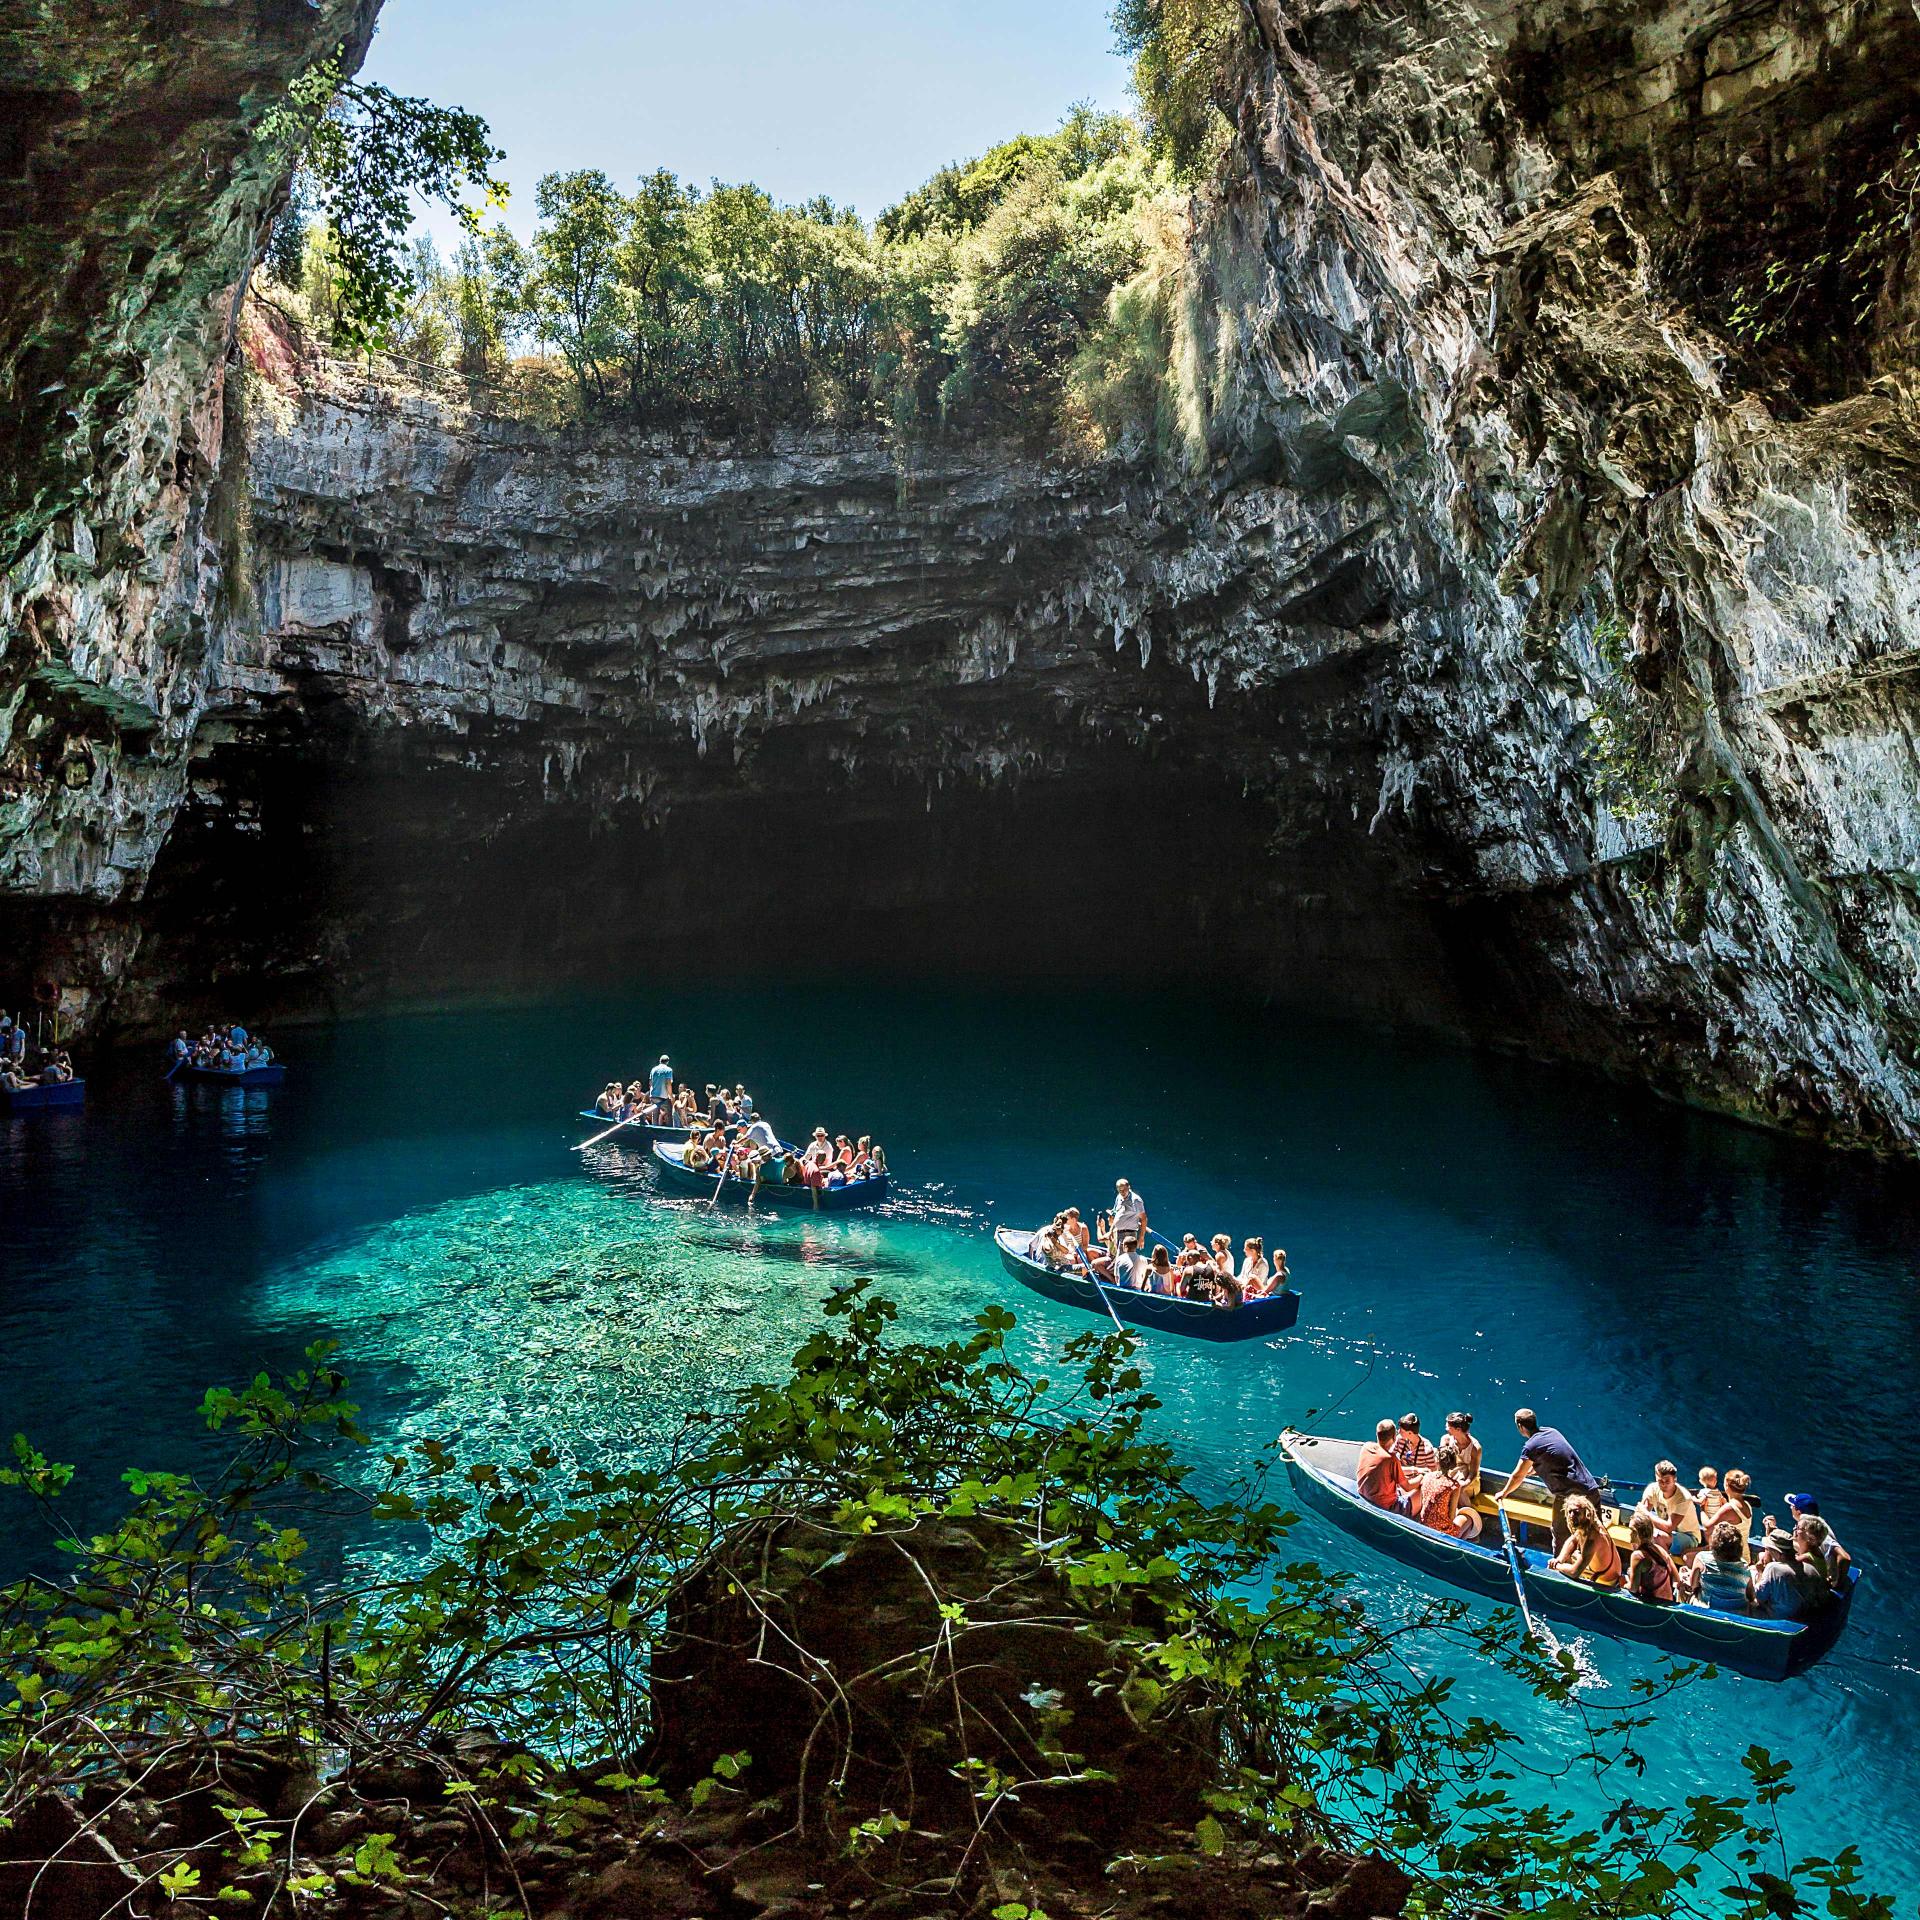 The underground lake at Melissani Cave, Greece